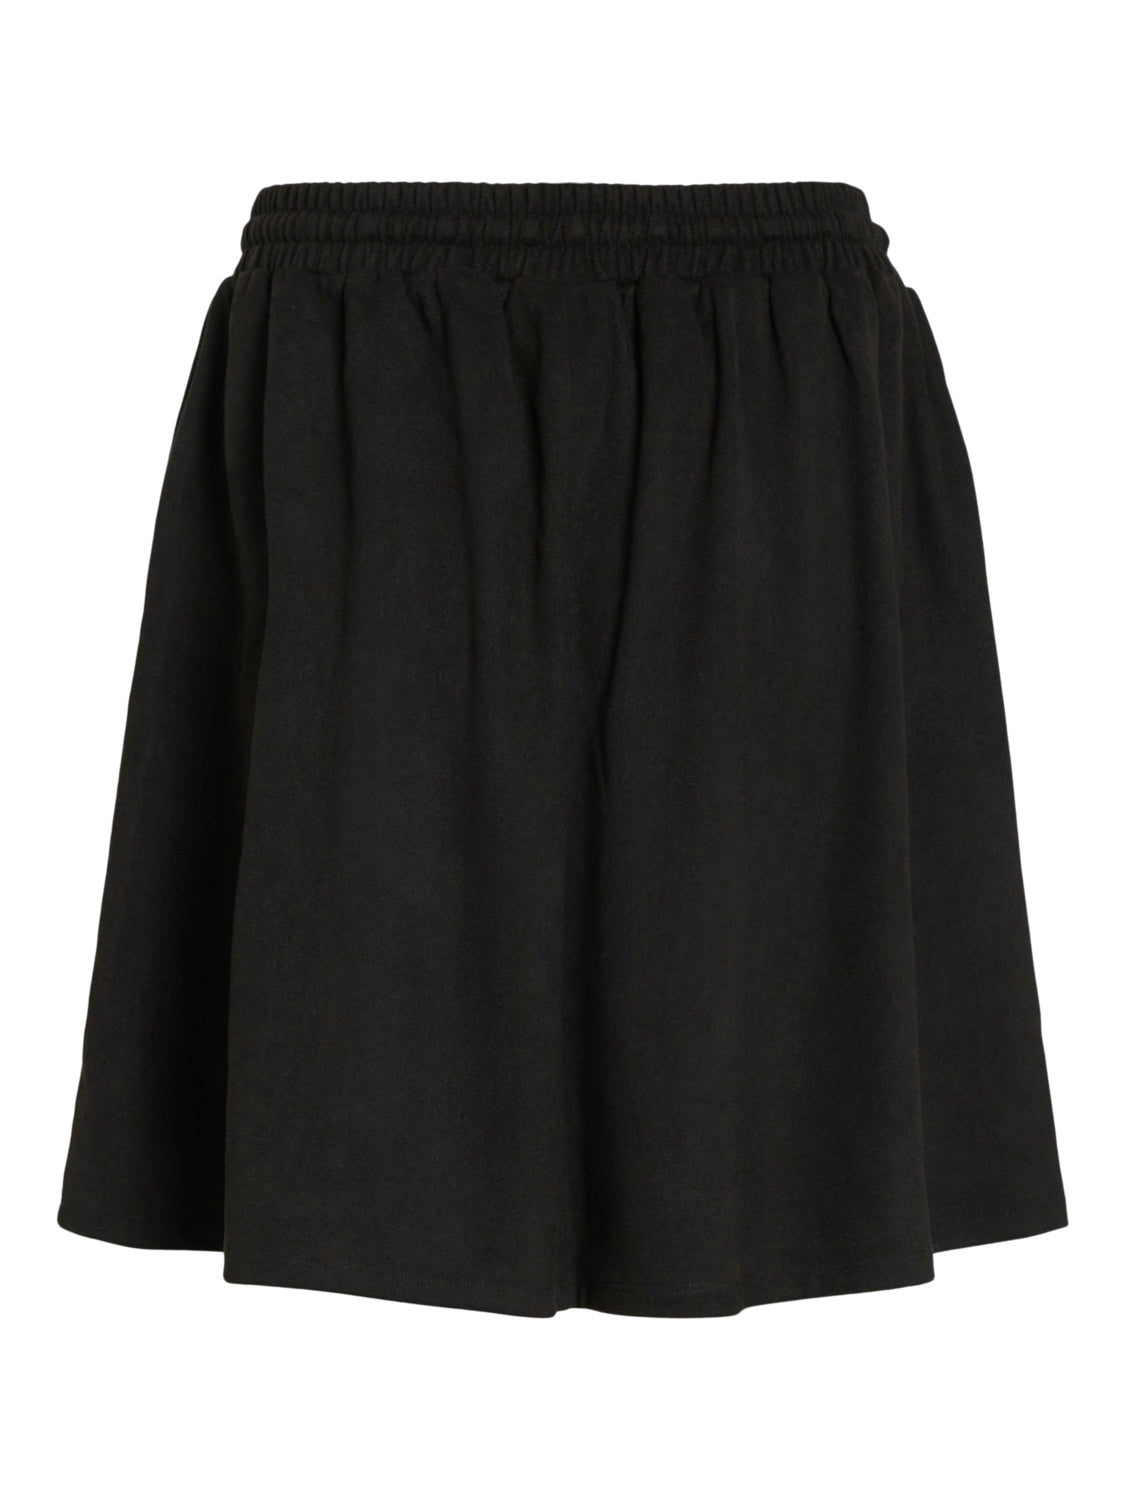 VISUDAS Skirt - Black